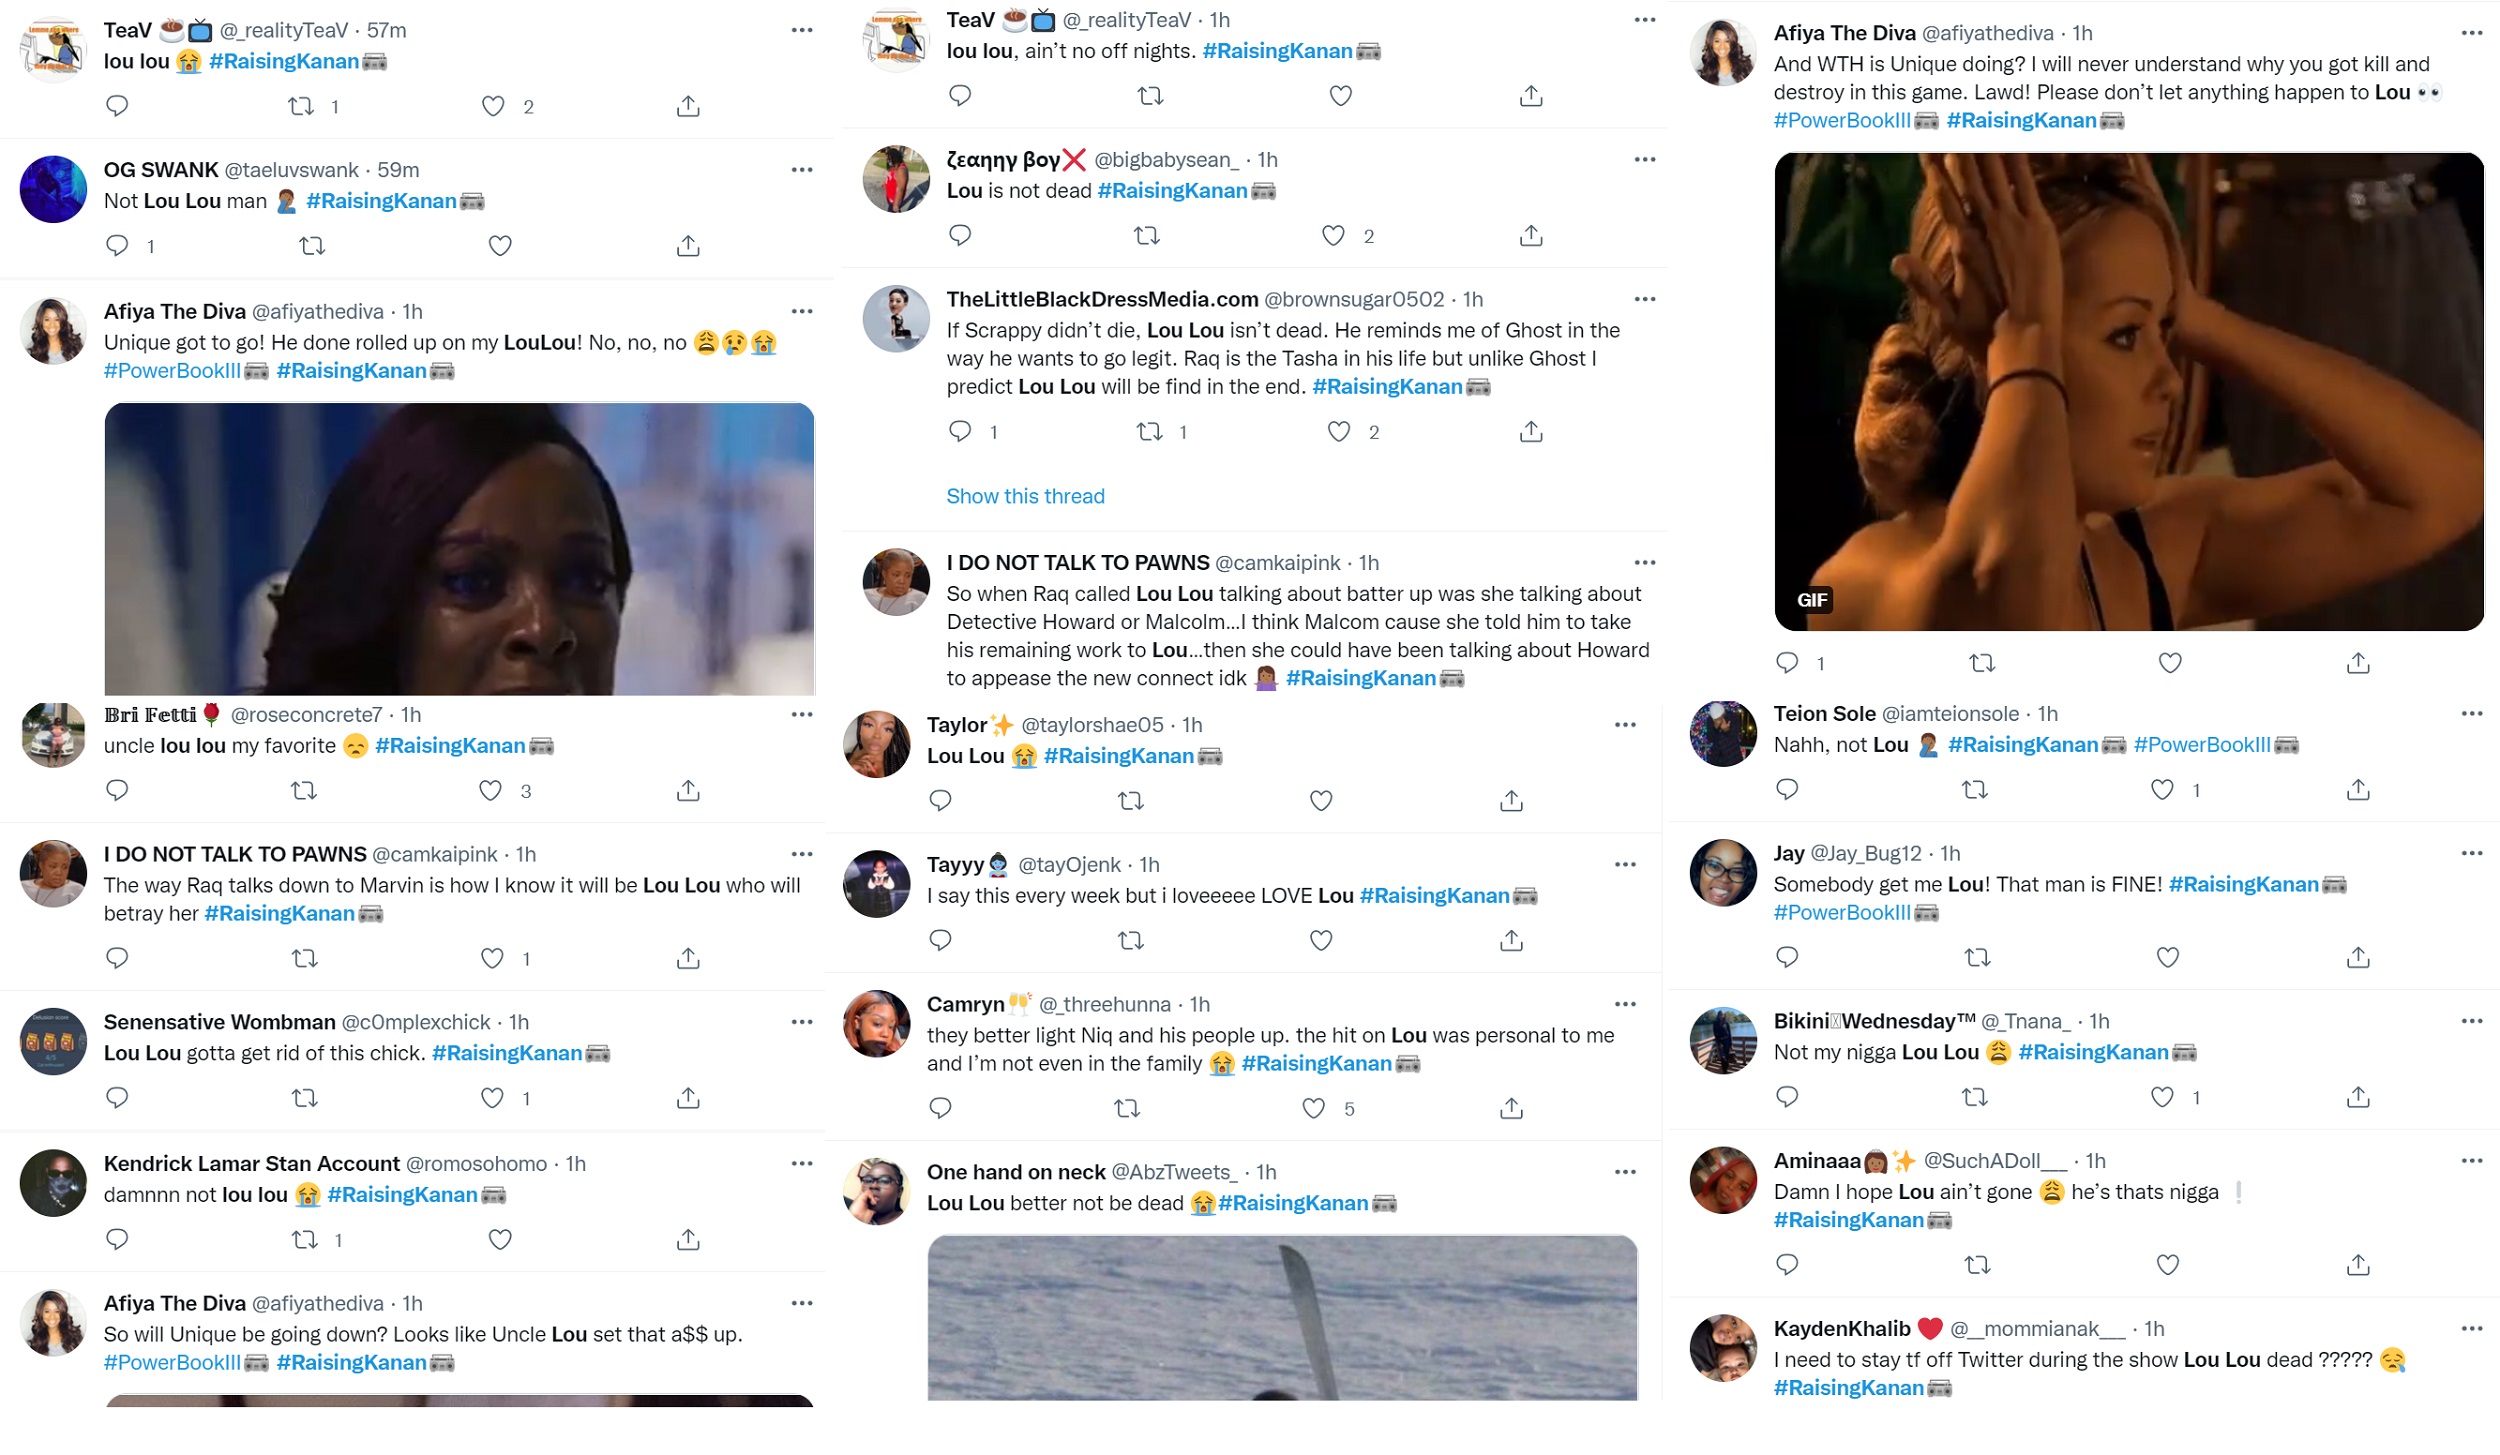 Fans on Twitter react to Lou Lou getting killed on Raising Kanan